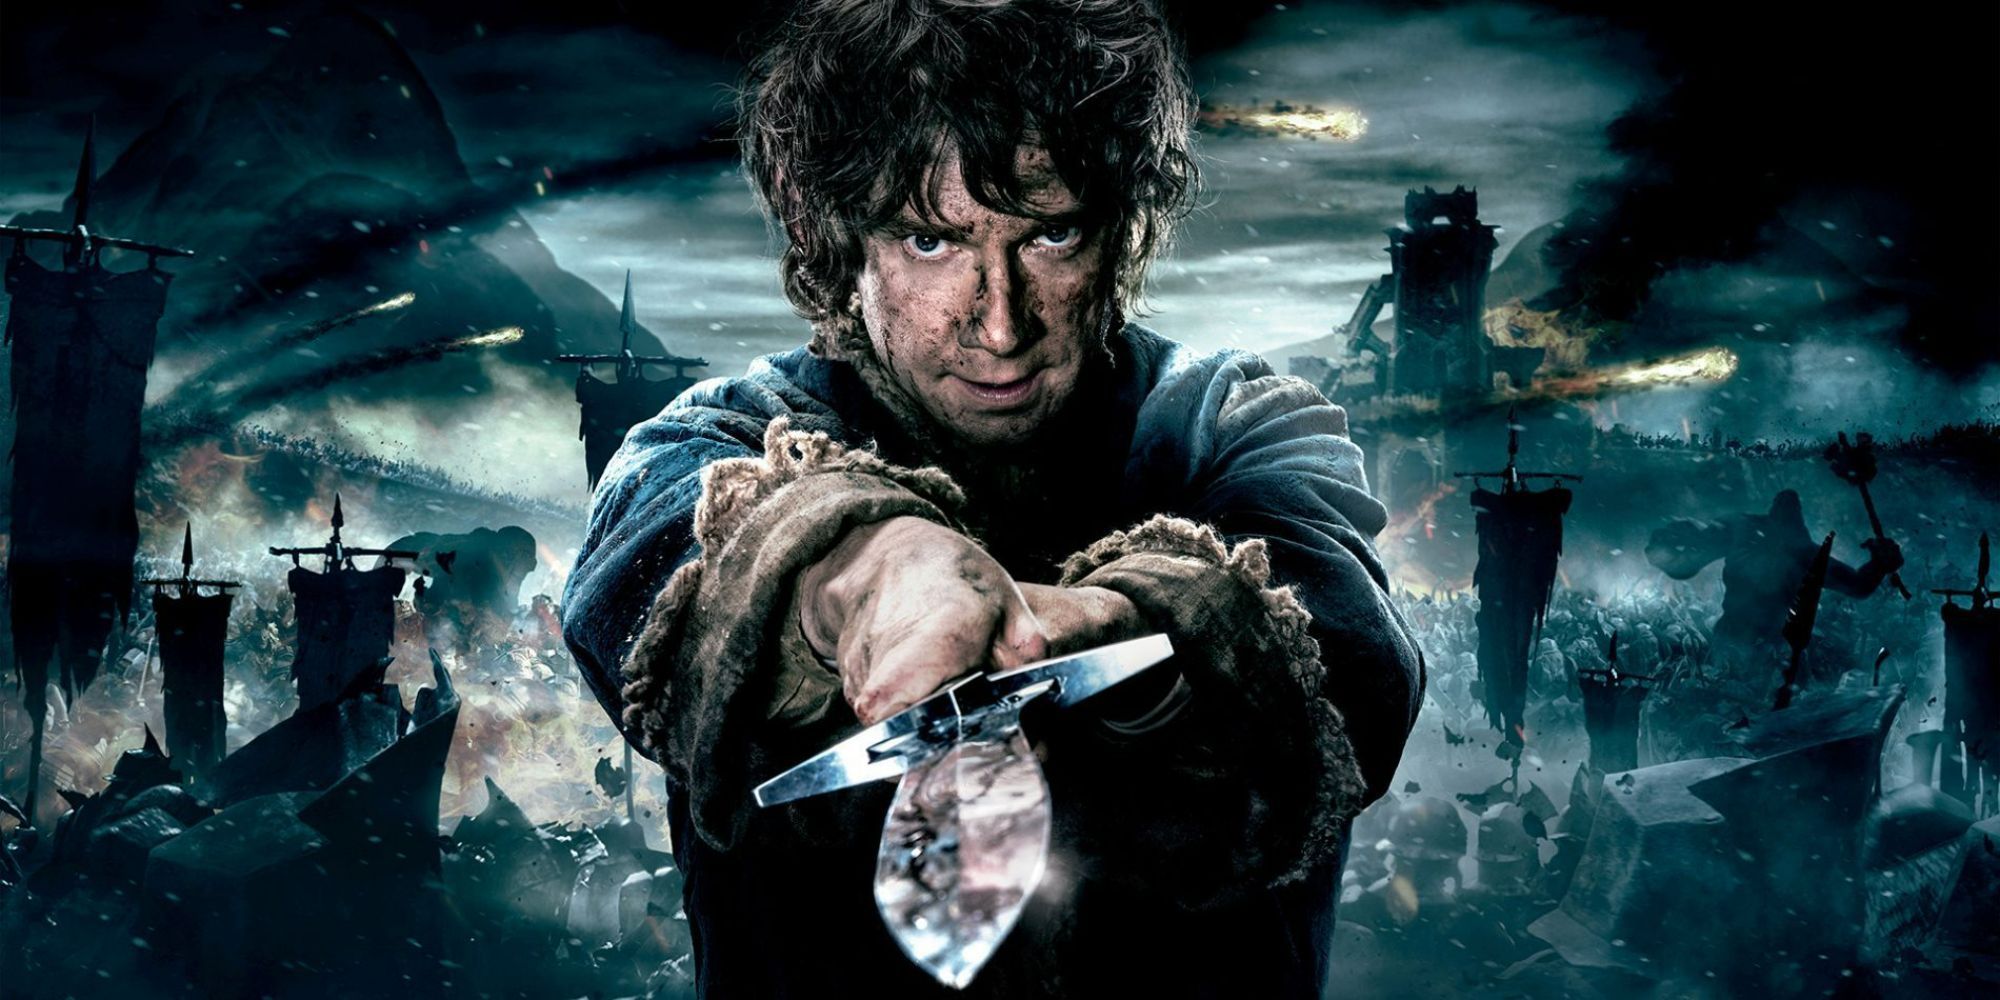 Bilbo wielding a sword